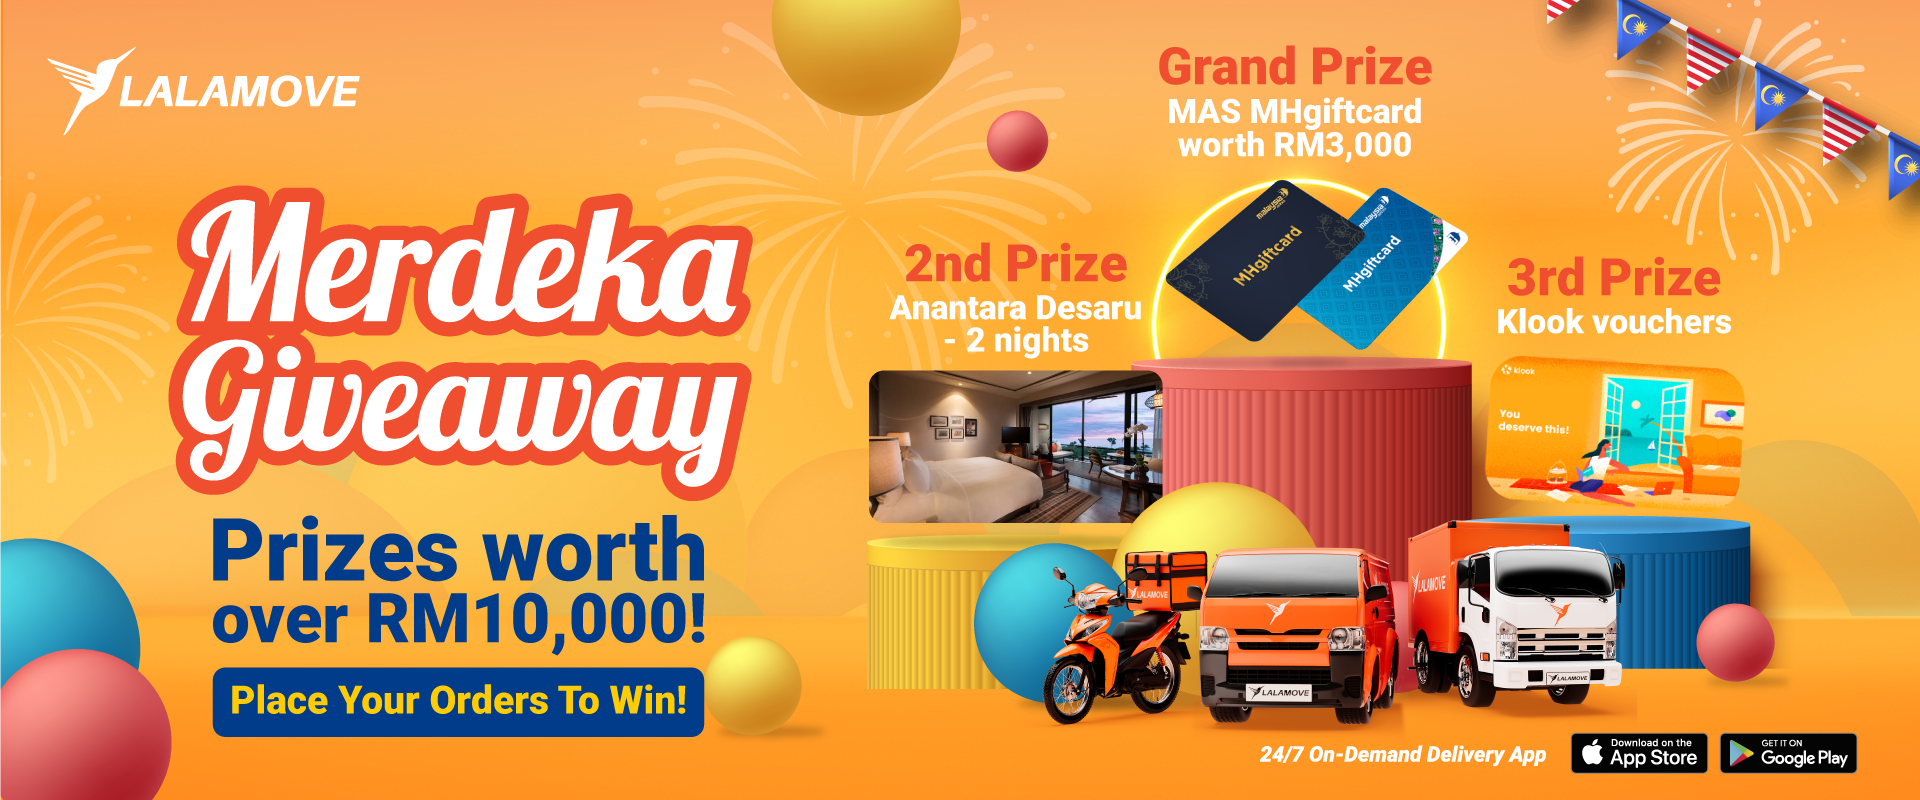 lalamove merdeka giveaway win prizes worth RM10,000 web banner